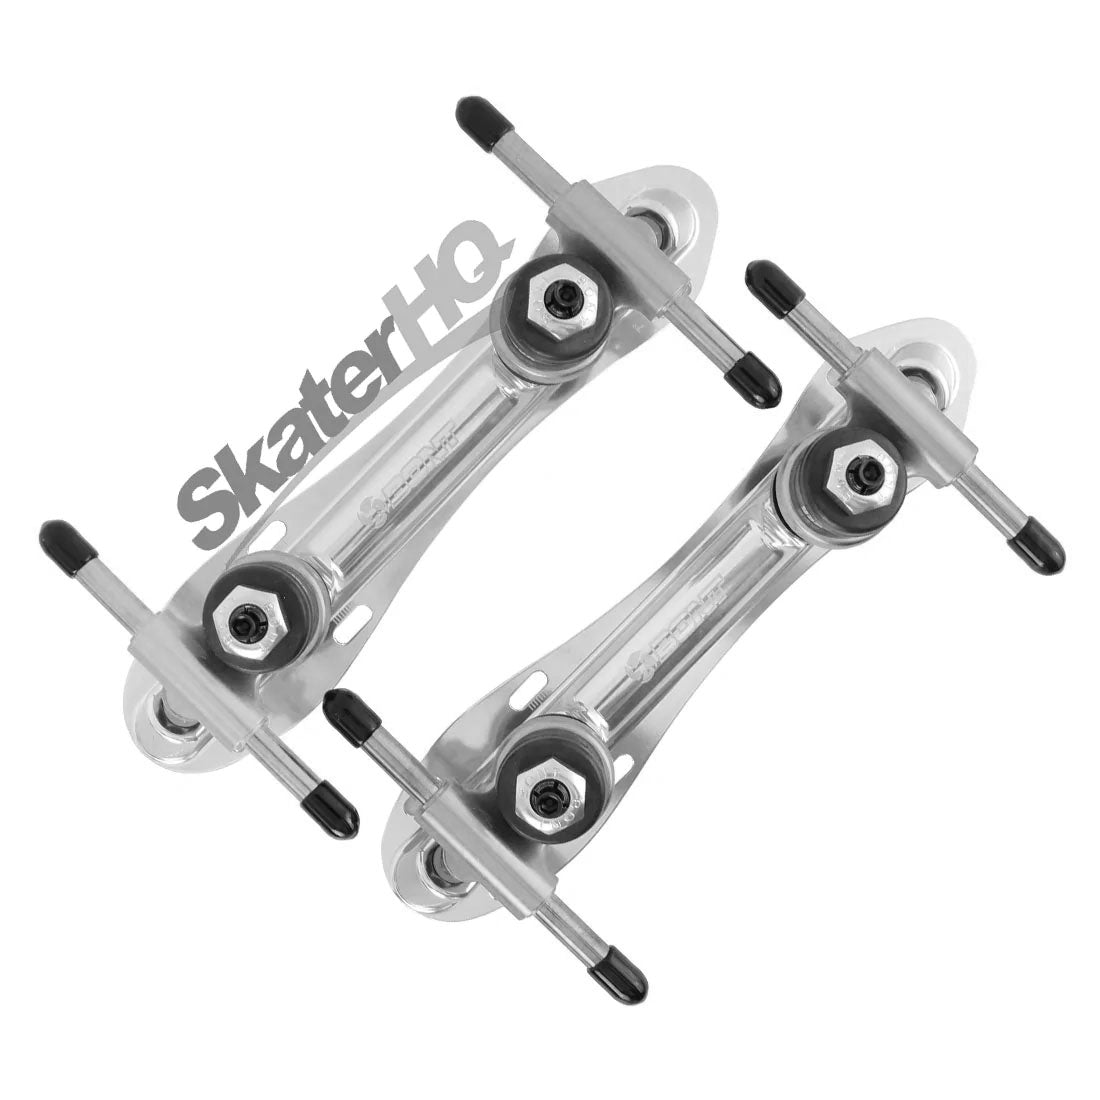 BONT Zeus Speed Plates 155mm - Silver Roller Skate Plates